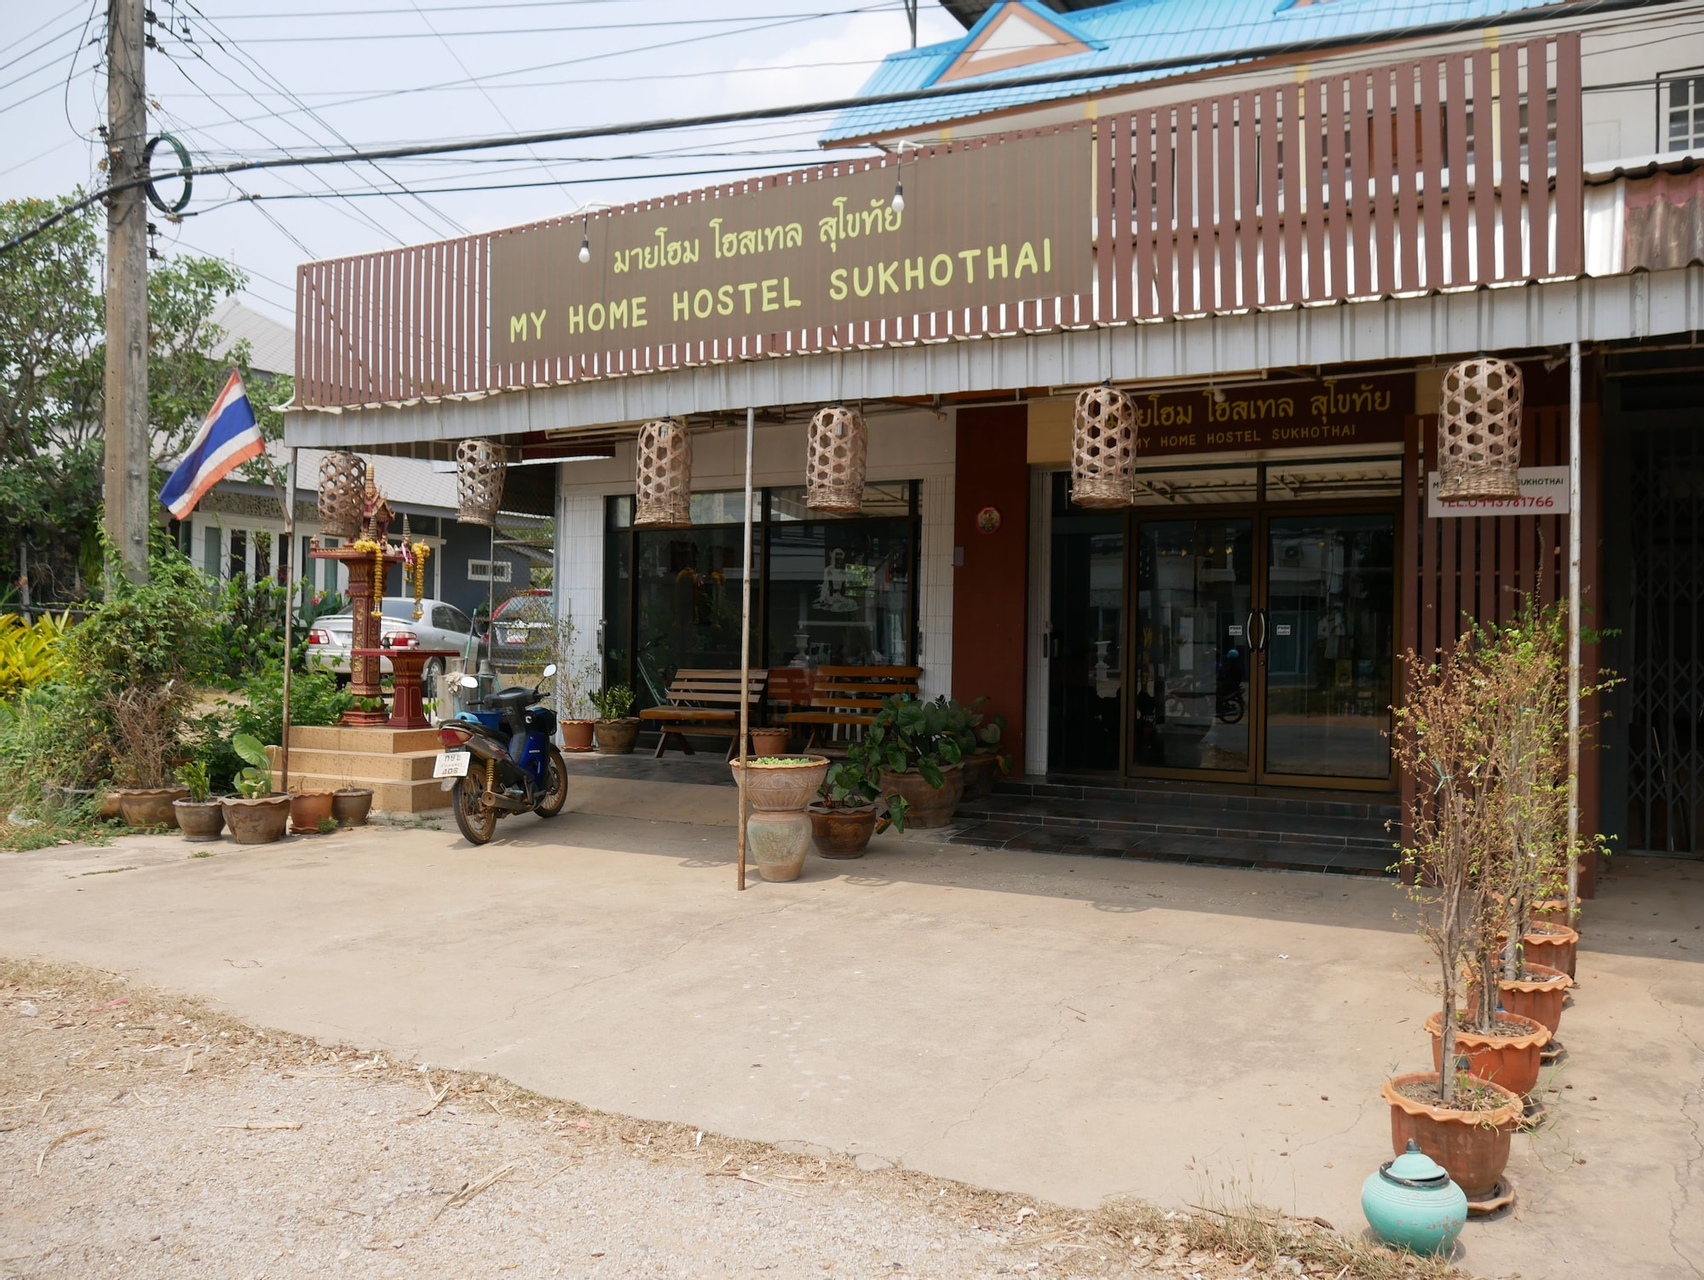 Exterior & Views, My Home Hostel Sukhothai, Muang Sukhothai